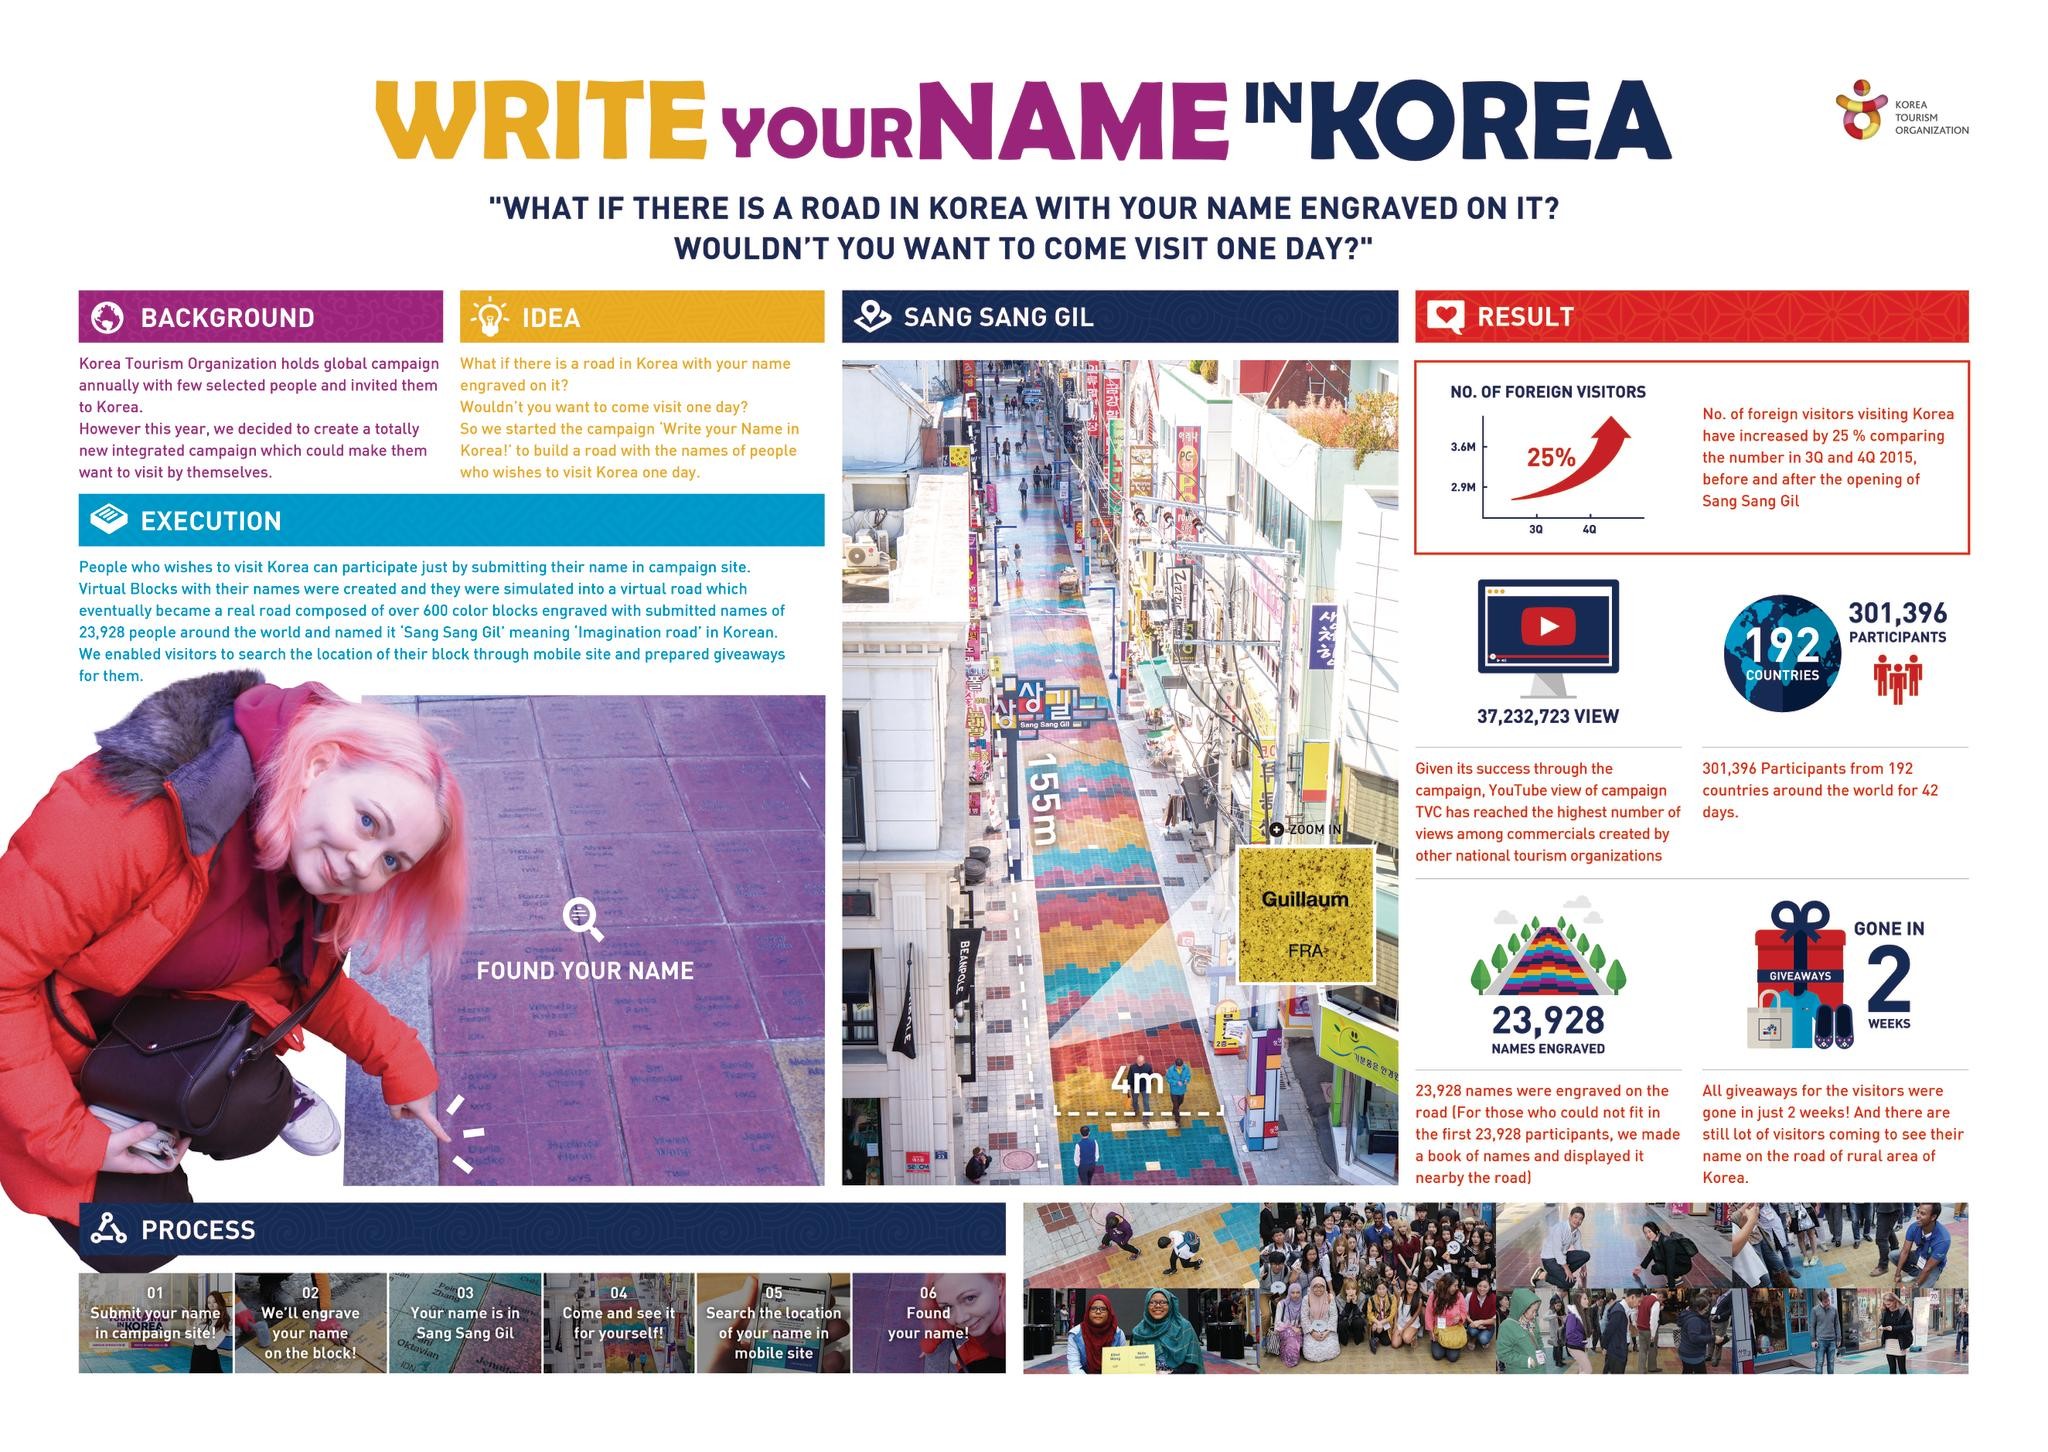 Write your name in Korea